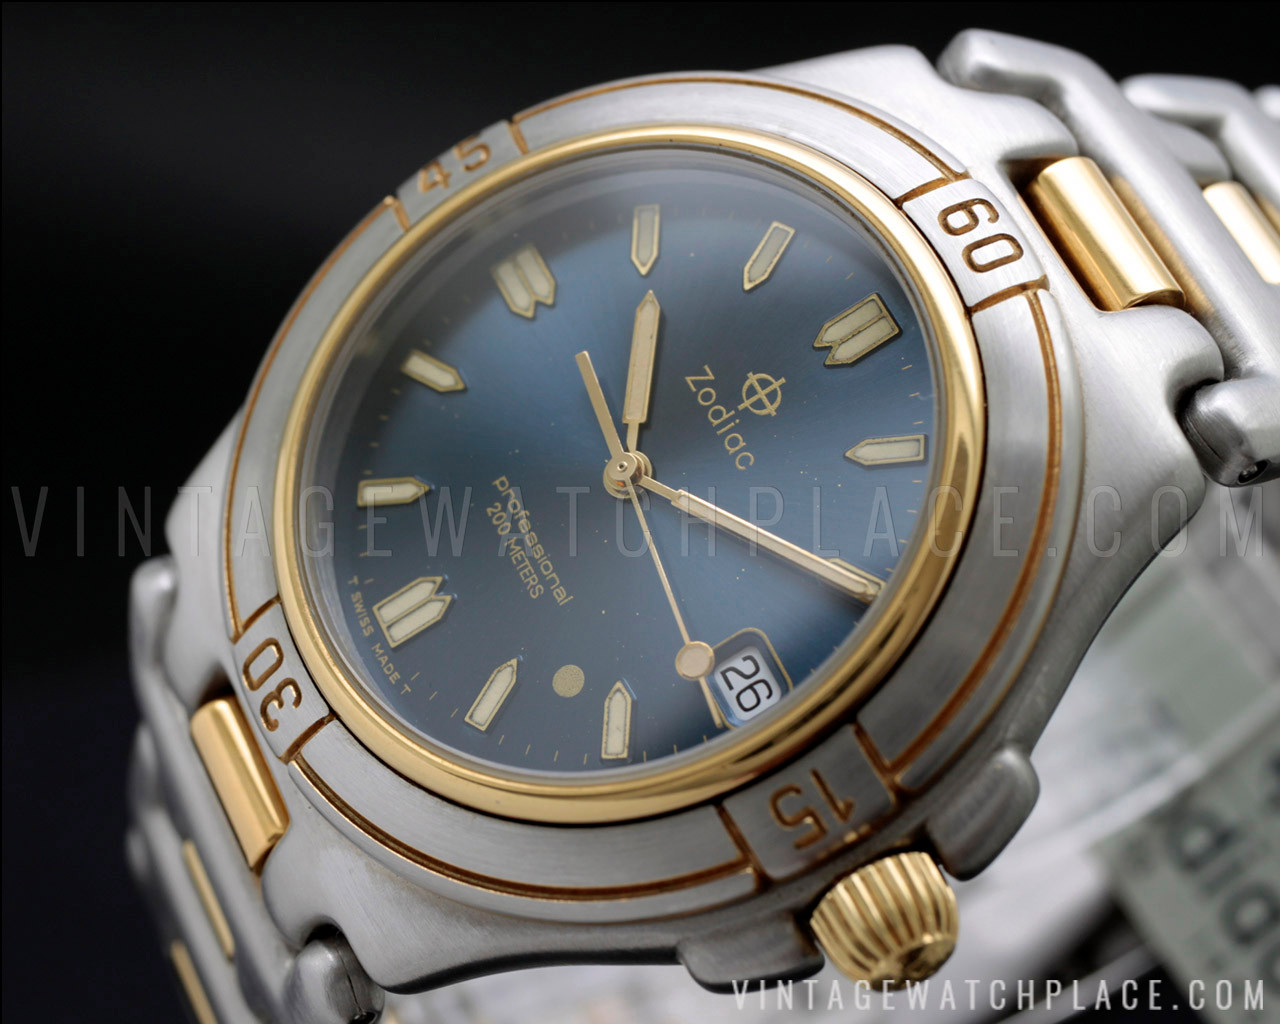 New Old Stock Zodiac Professional 200M quartz vintage watch